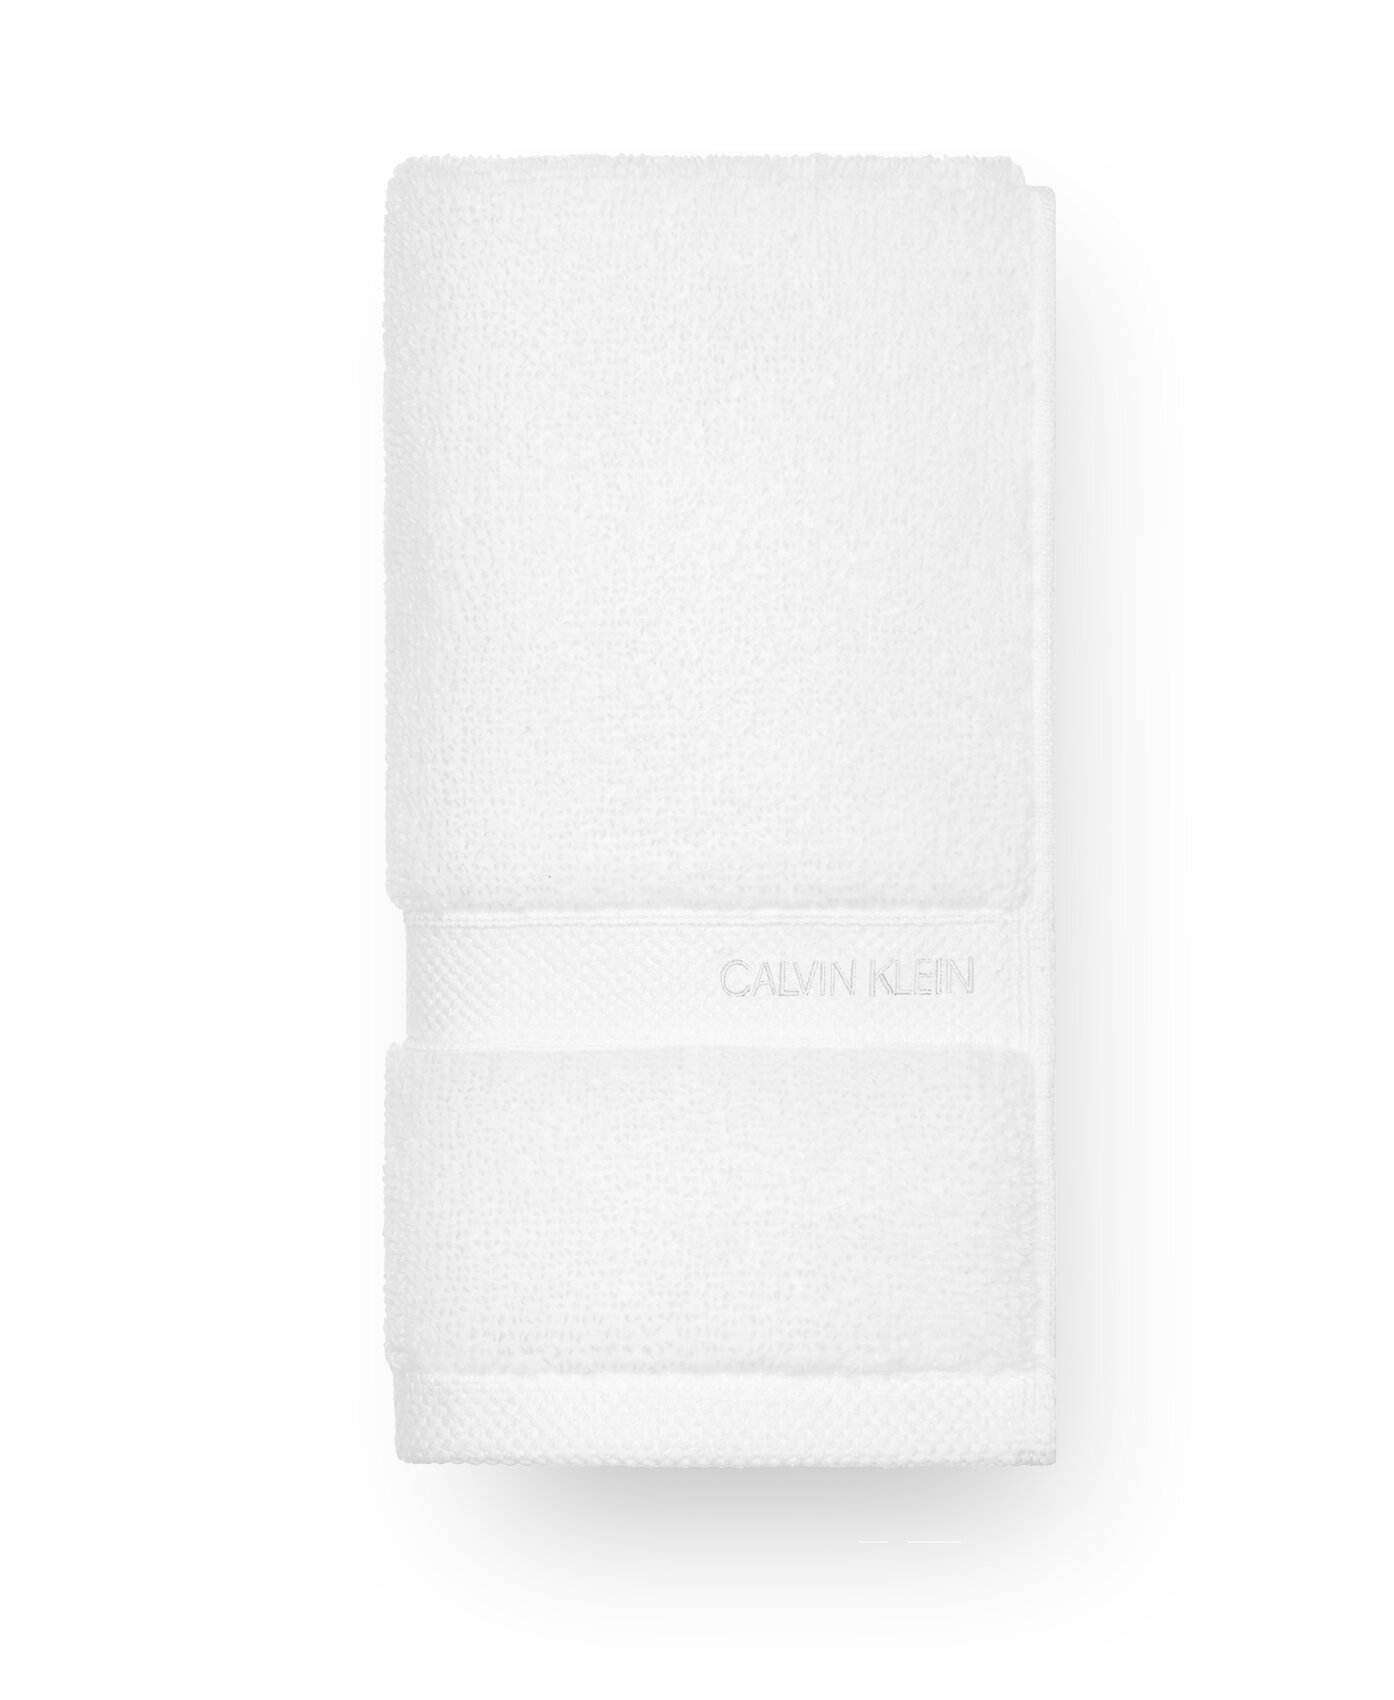 Calvin Klein Home1 Wash Cloth,100% Cotton | Wayfair